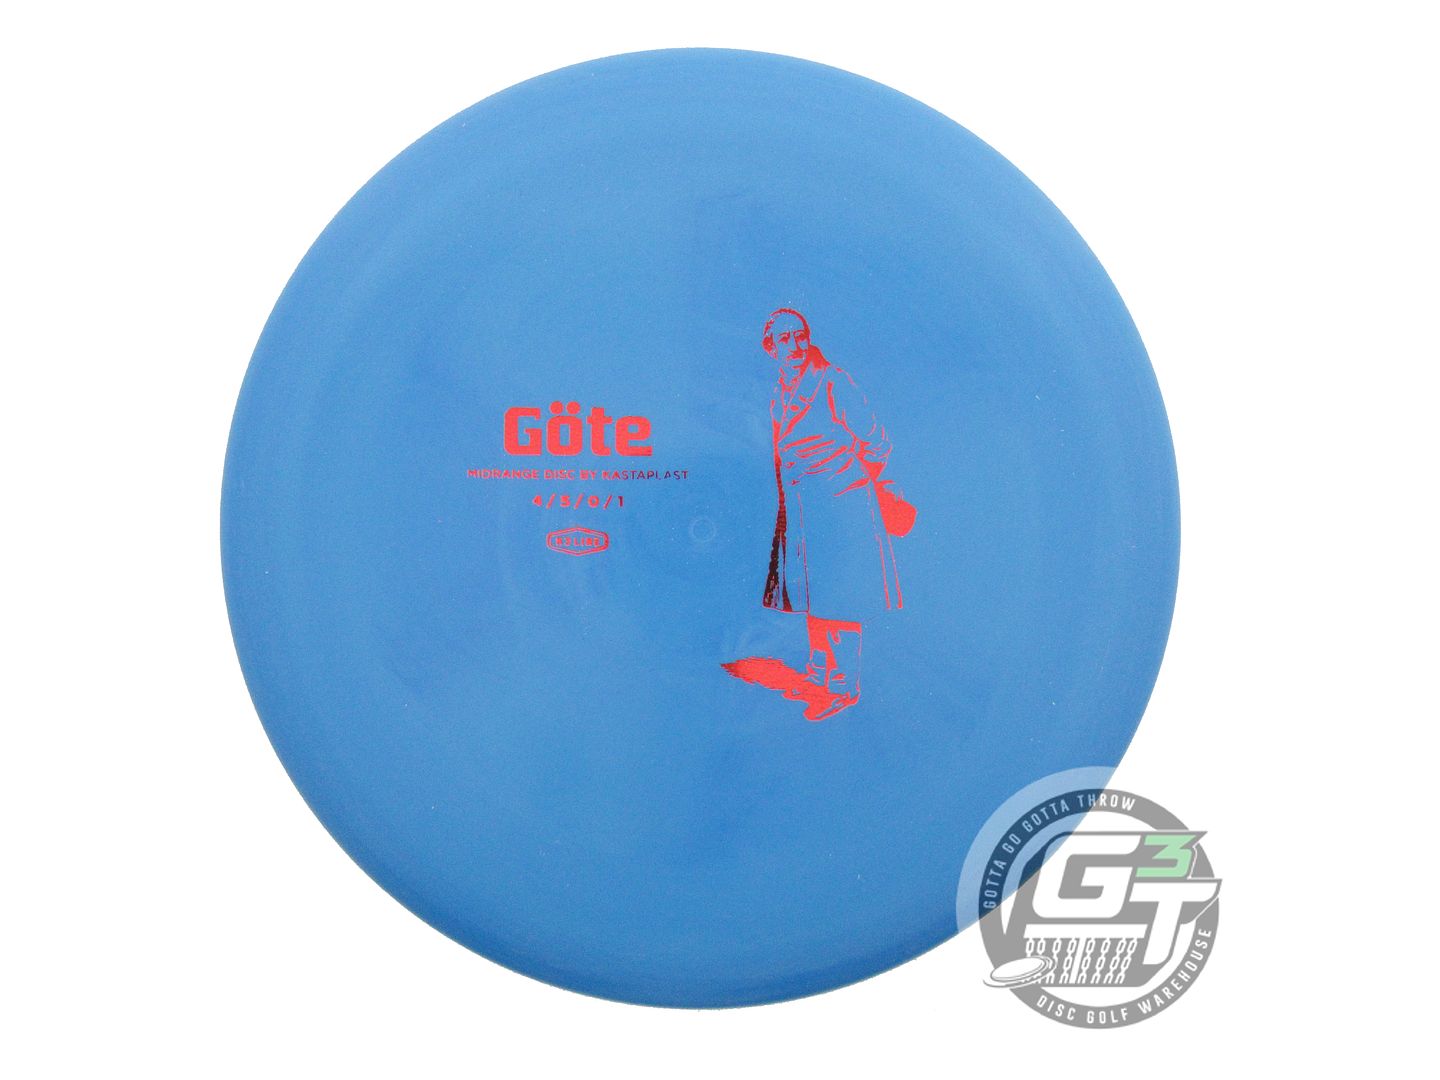 Kastaplast K3 Gote Midrange Golf Disc (Individually Listed)